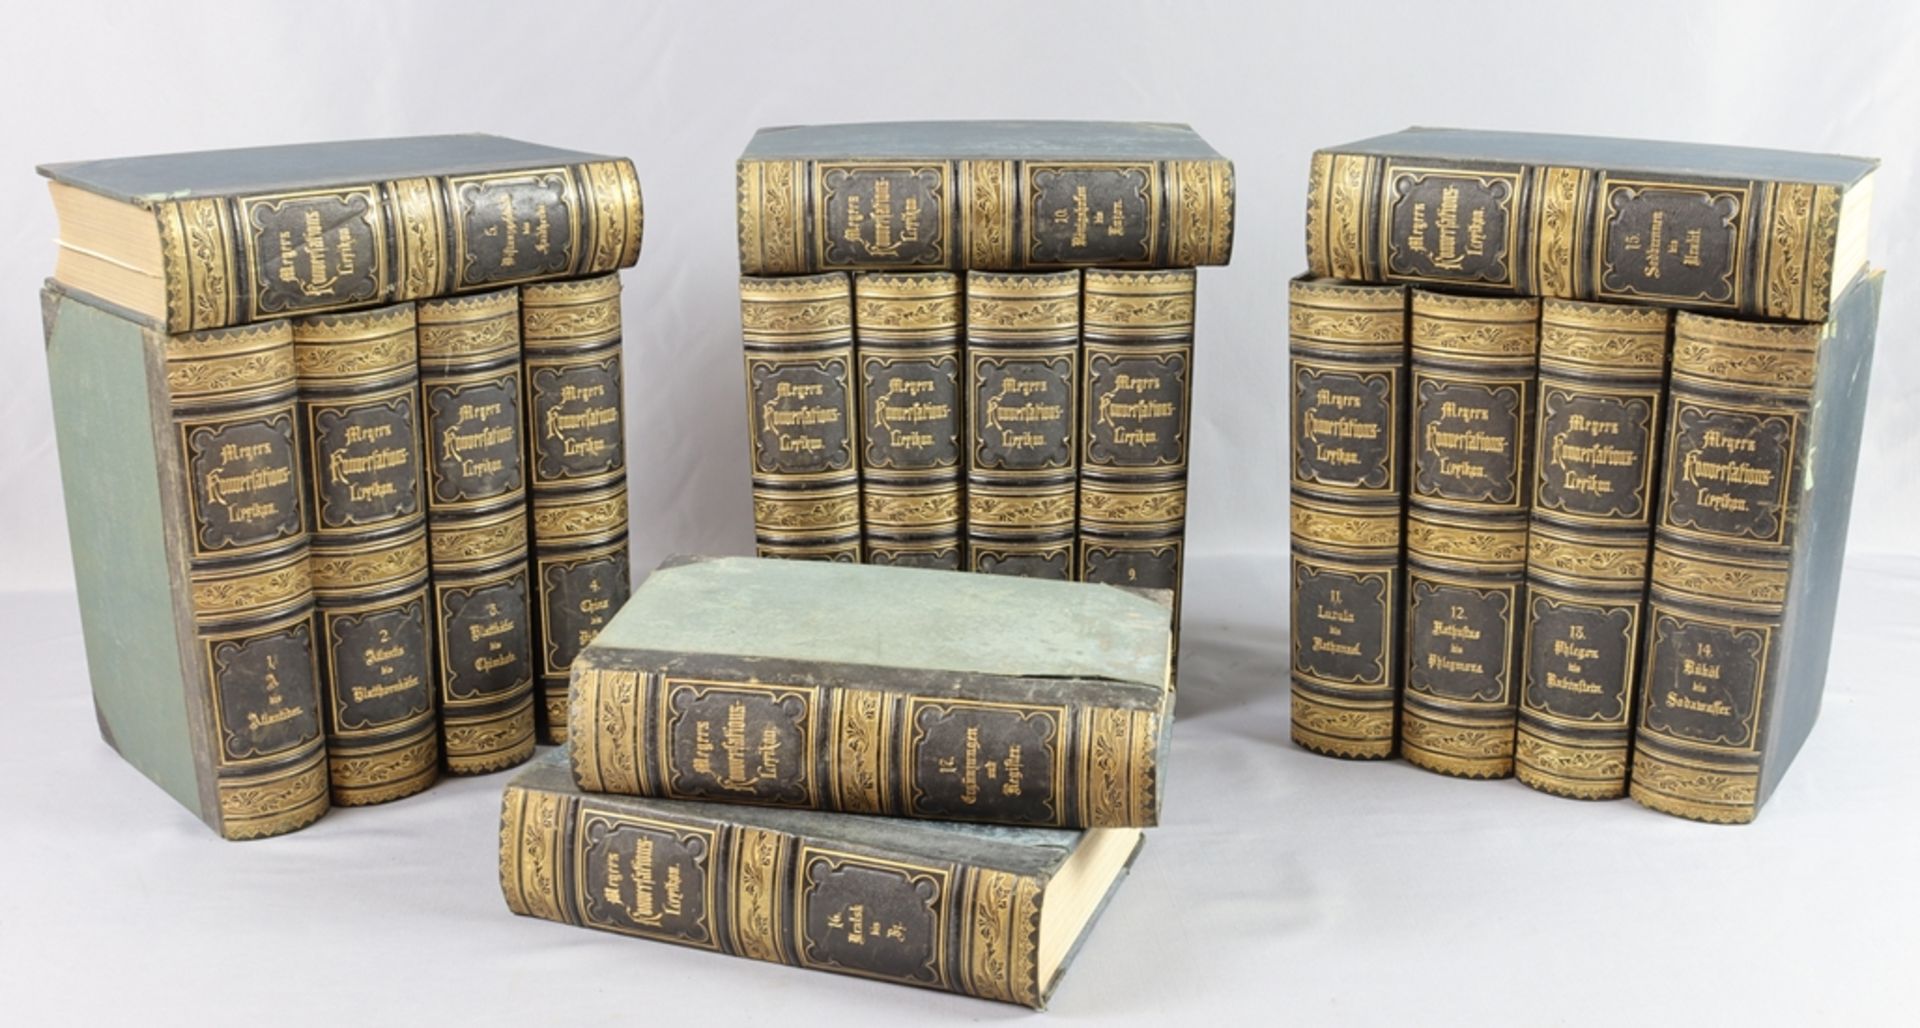 Complete Meyers Konversationslexikon in 17 volumes, year 1890, German Empire